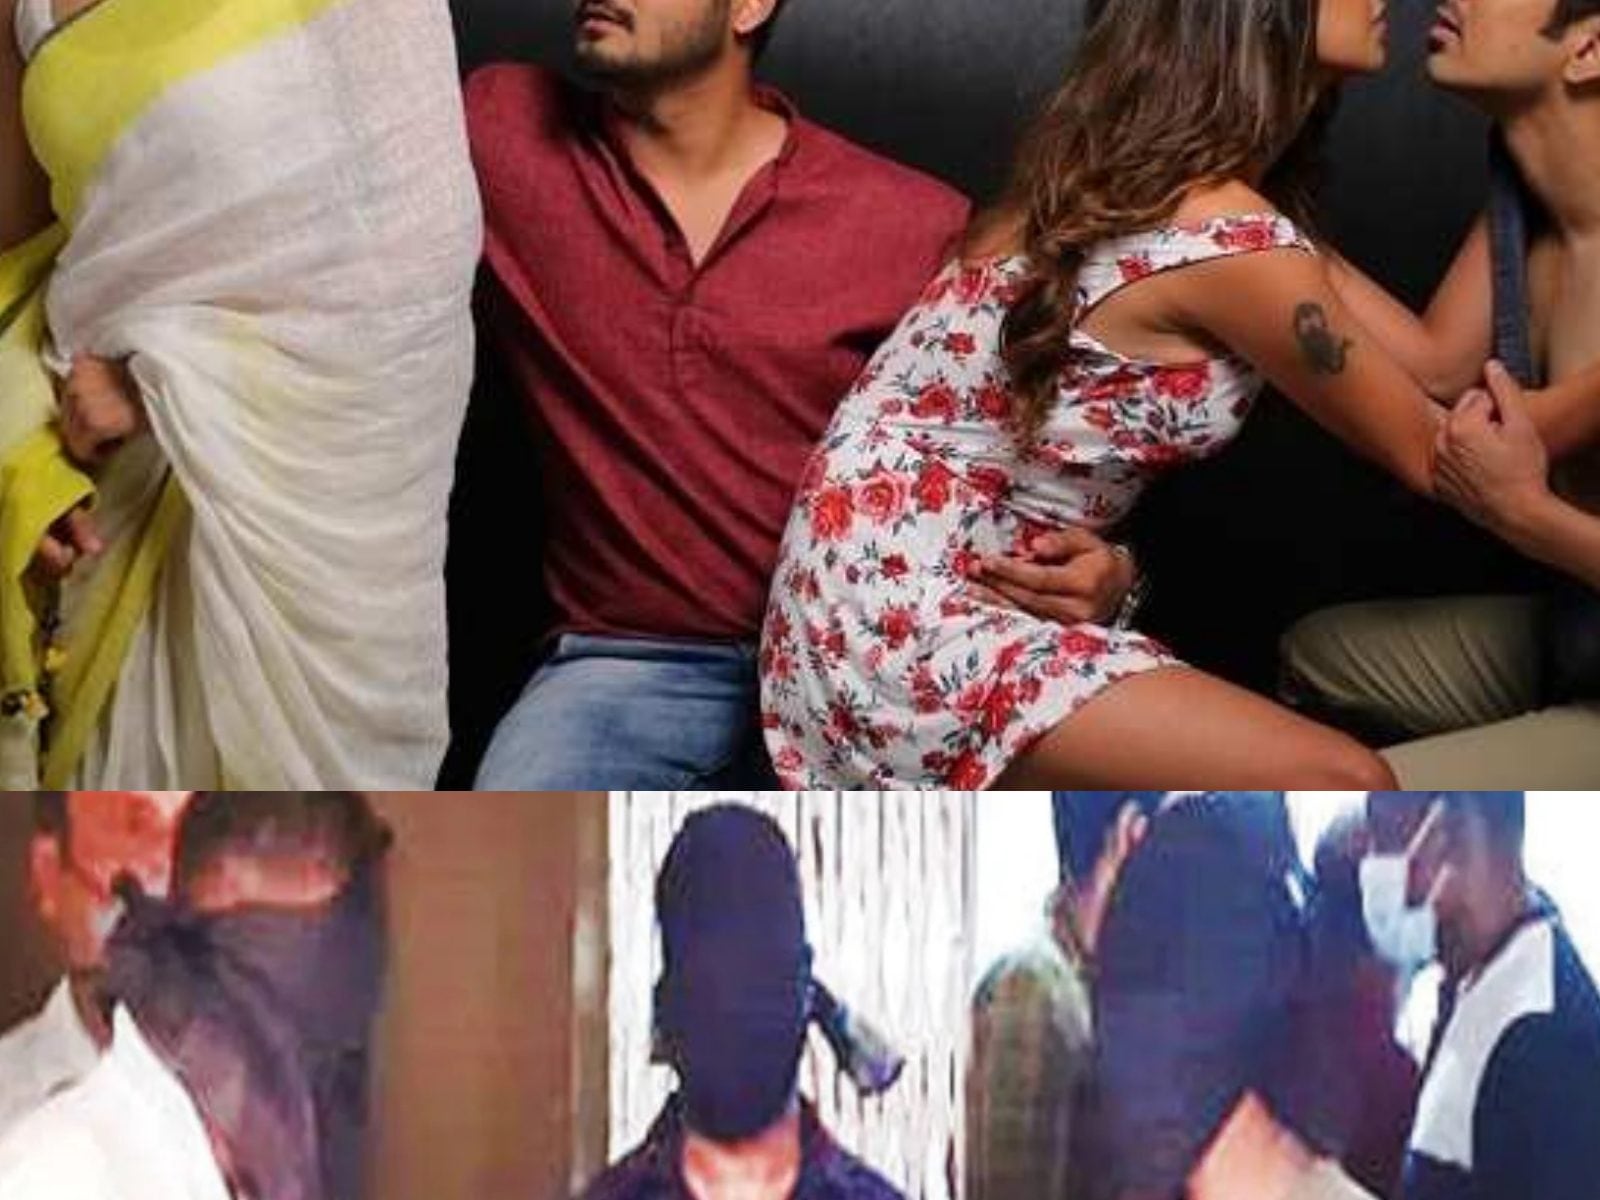 Wife swap భార్యలను మార్చుకుంటూ బరితెగింపు సెక్స్ -1000 జంటల వికృత రాసలీల Kerala Wife swap racket busted Kerala police arrest seven people involved in partner swapping mks– News18 Telugu pic